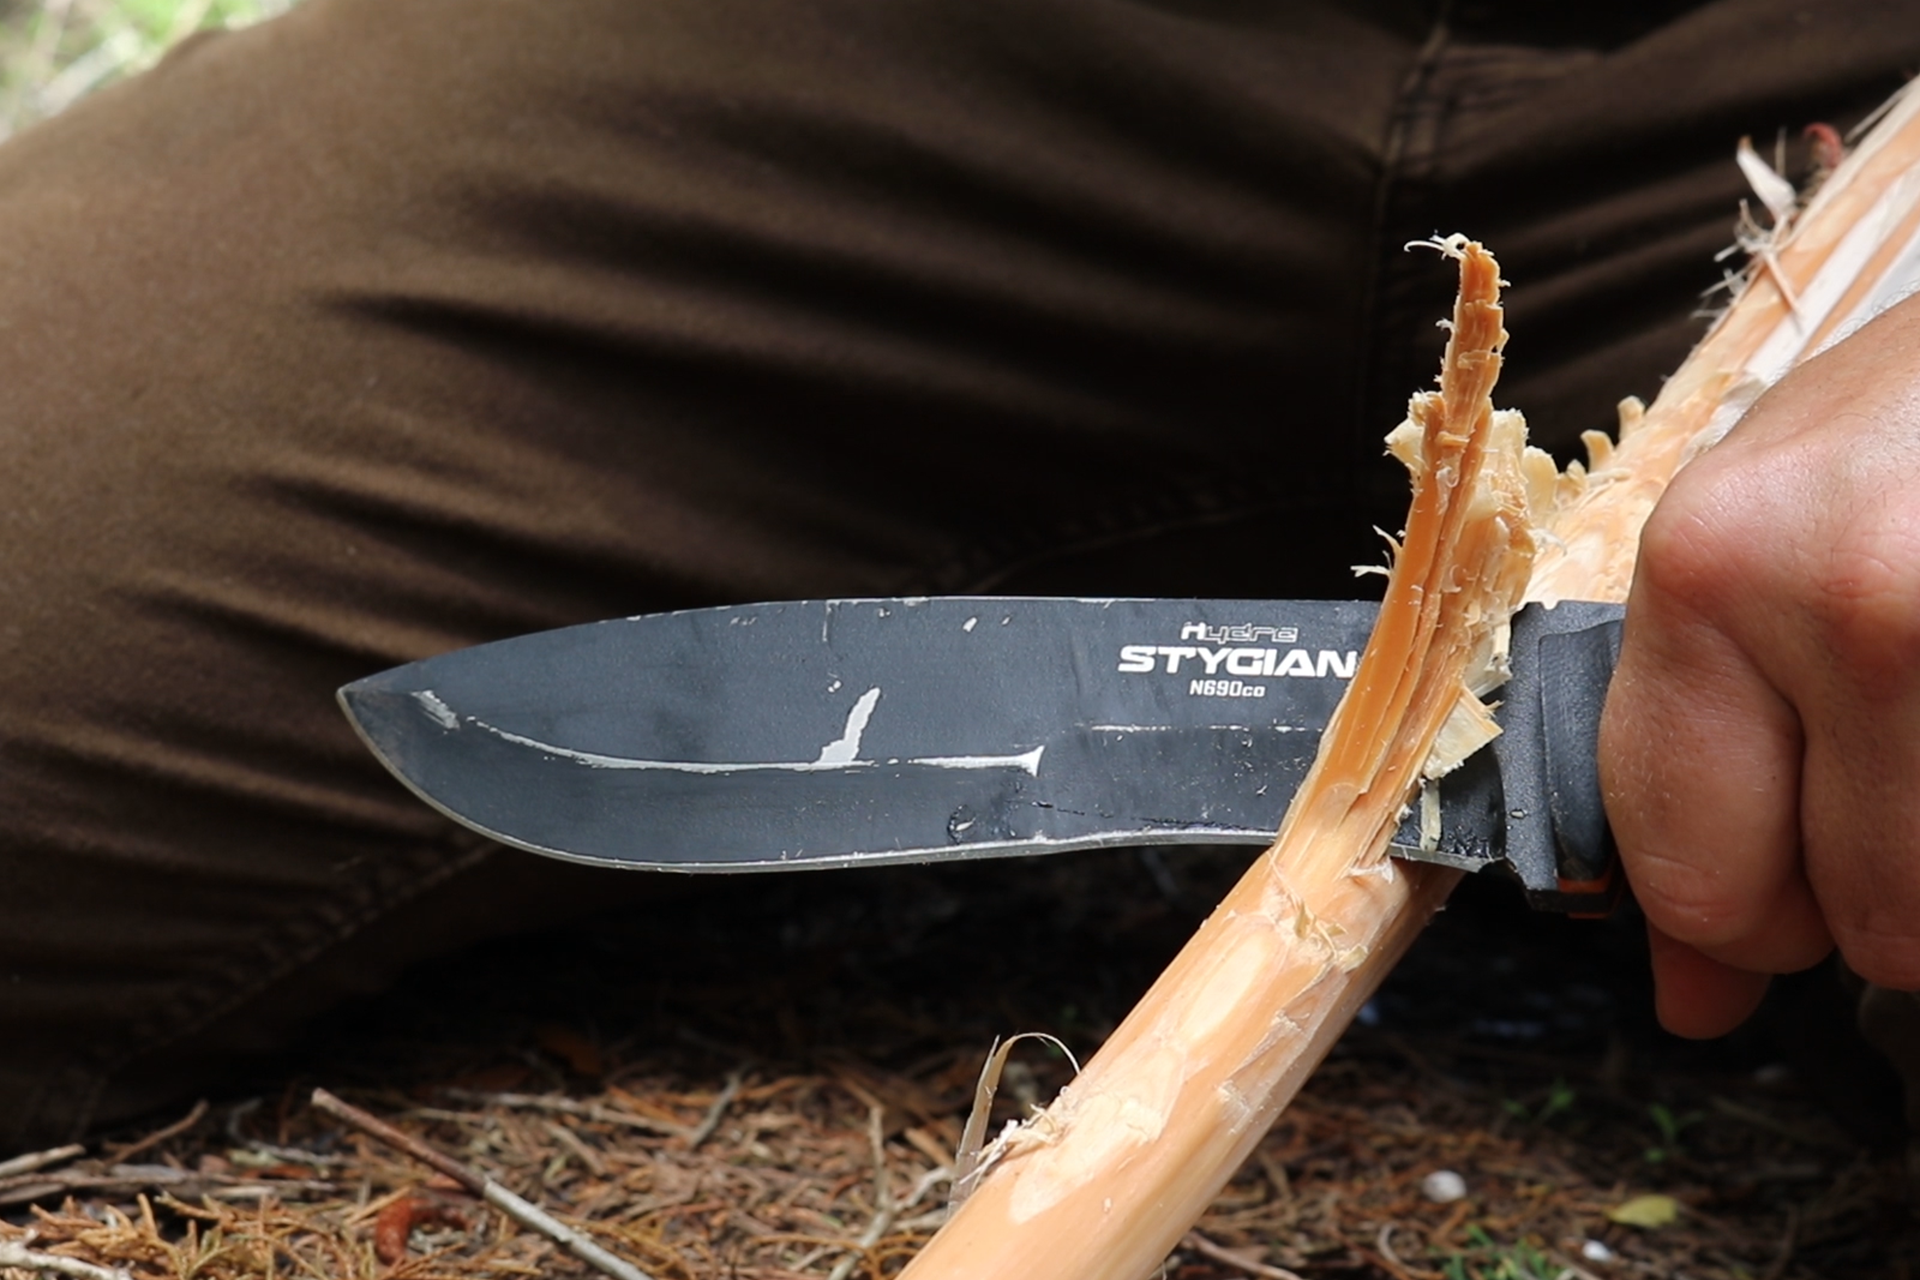 Mora Bushcraft Survival Knife Review